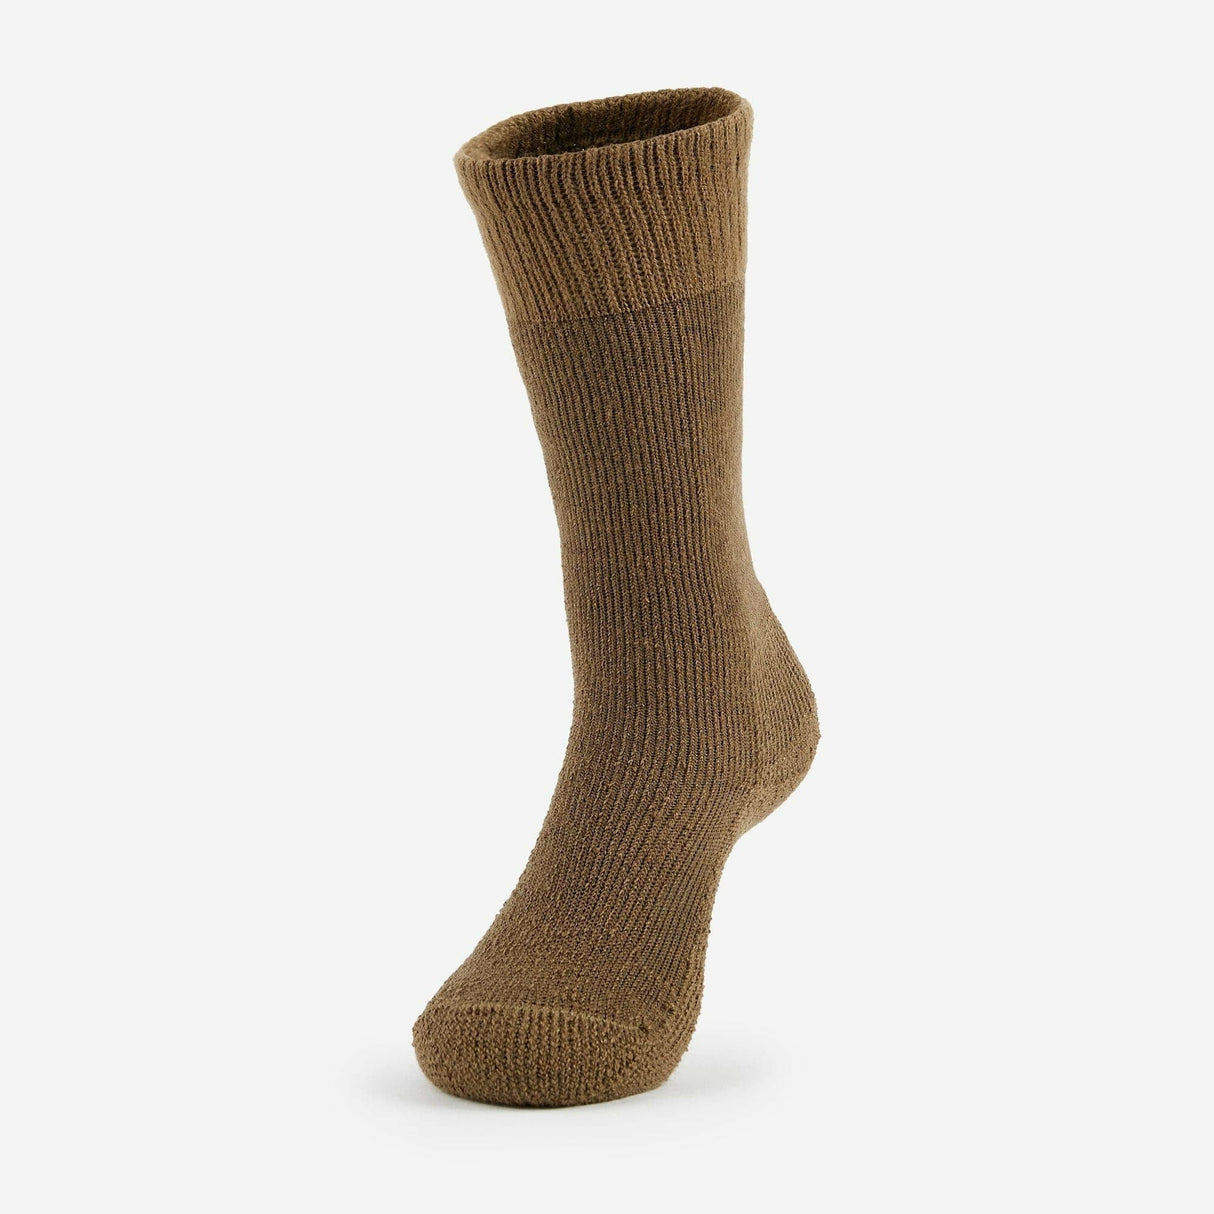 Thorlo Military Maximum Cushion OTC Socks  -  Small / Coyote Brown / Single Pair